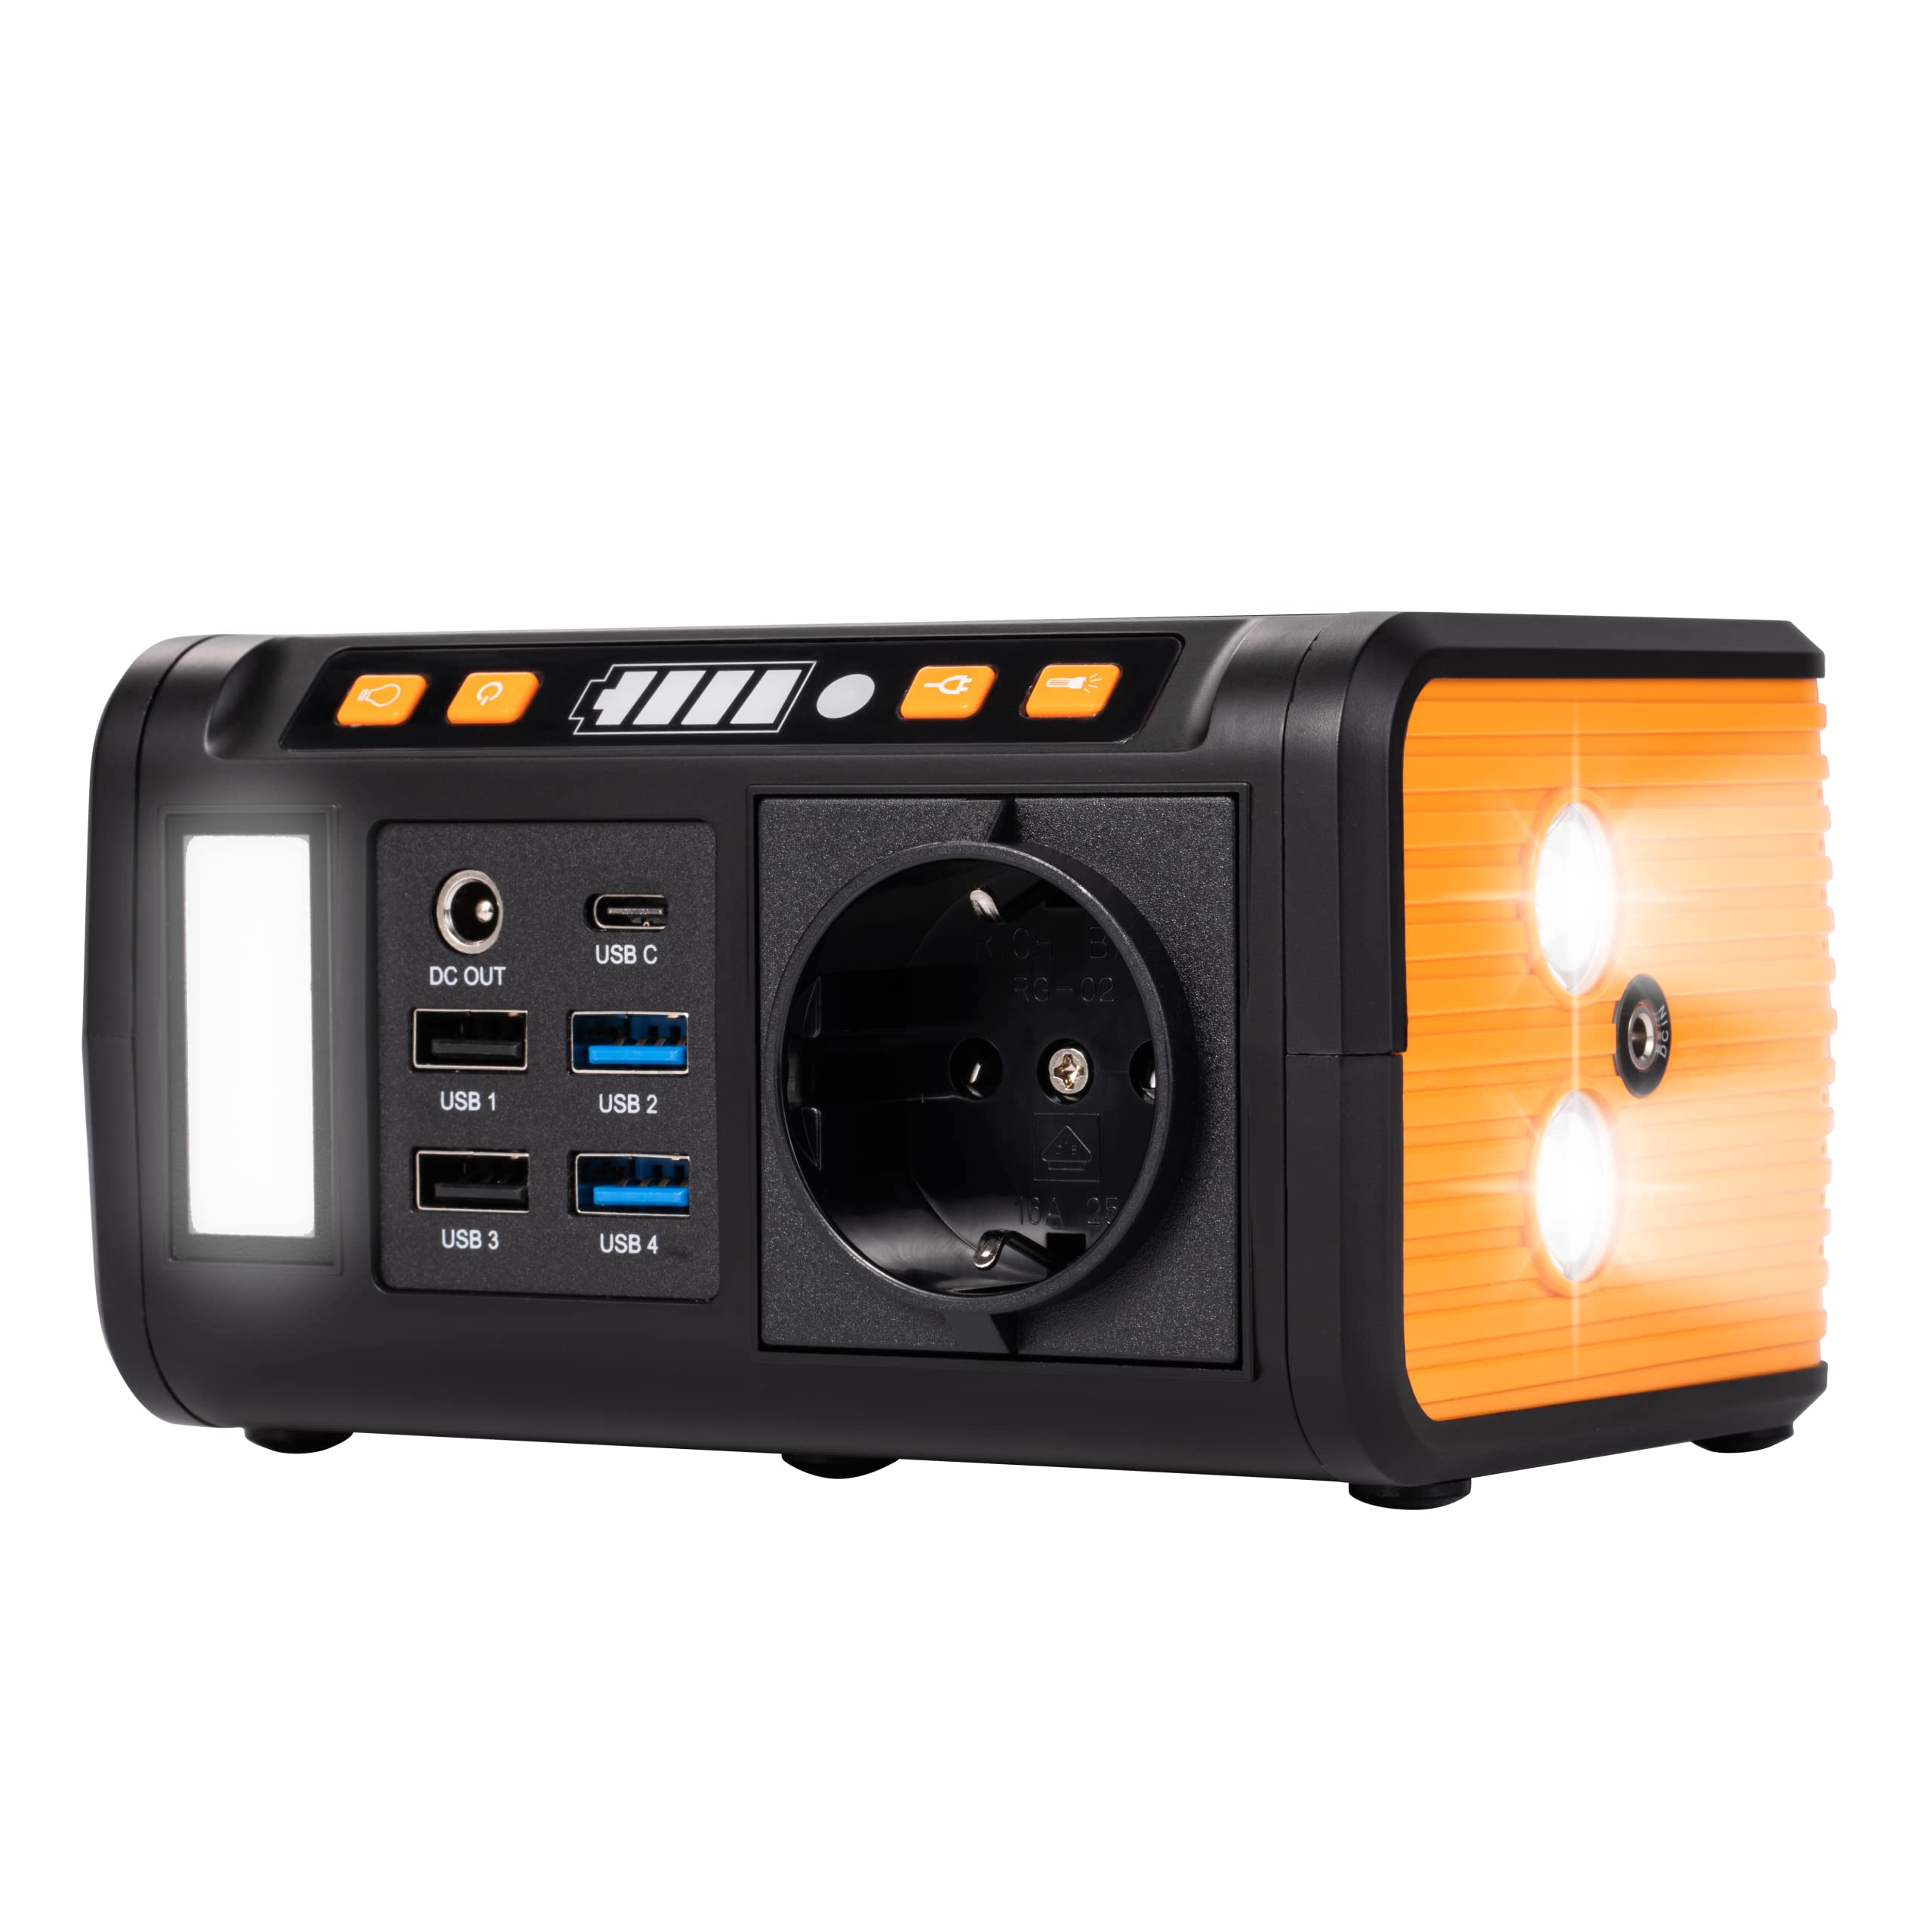 Technaxx Mini Powerstation TX-205 mit LED Panel, Lampe, 5X USB - 74Wh Powerbank 230V mit eingebauter Steckdose für Laptop, Handy, Mini-Kühlschrank etc., Kompatibel mit Solarladegeräten